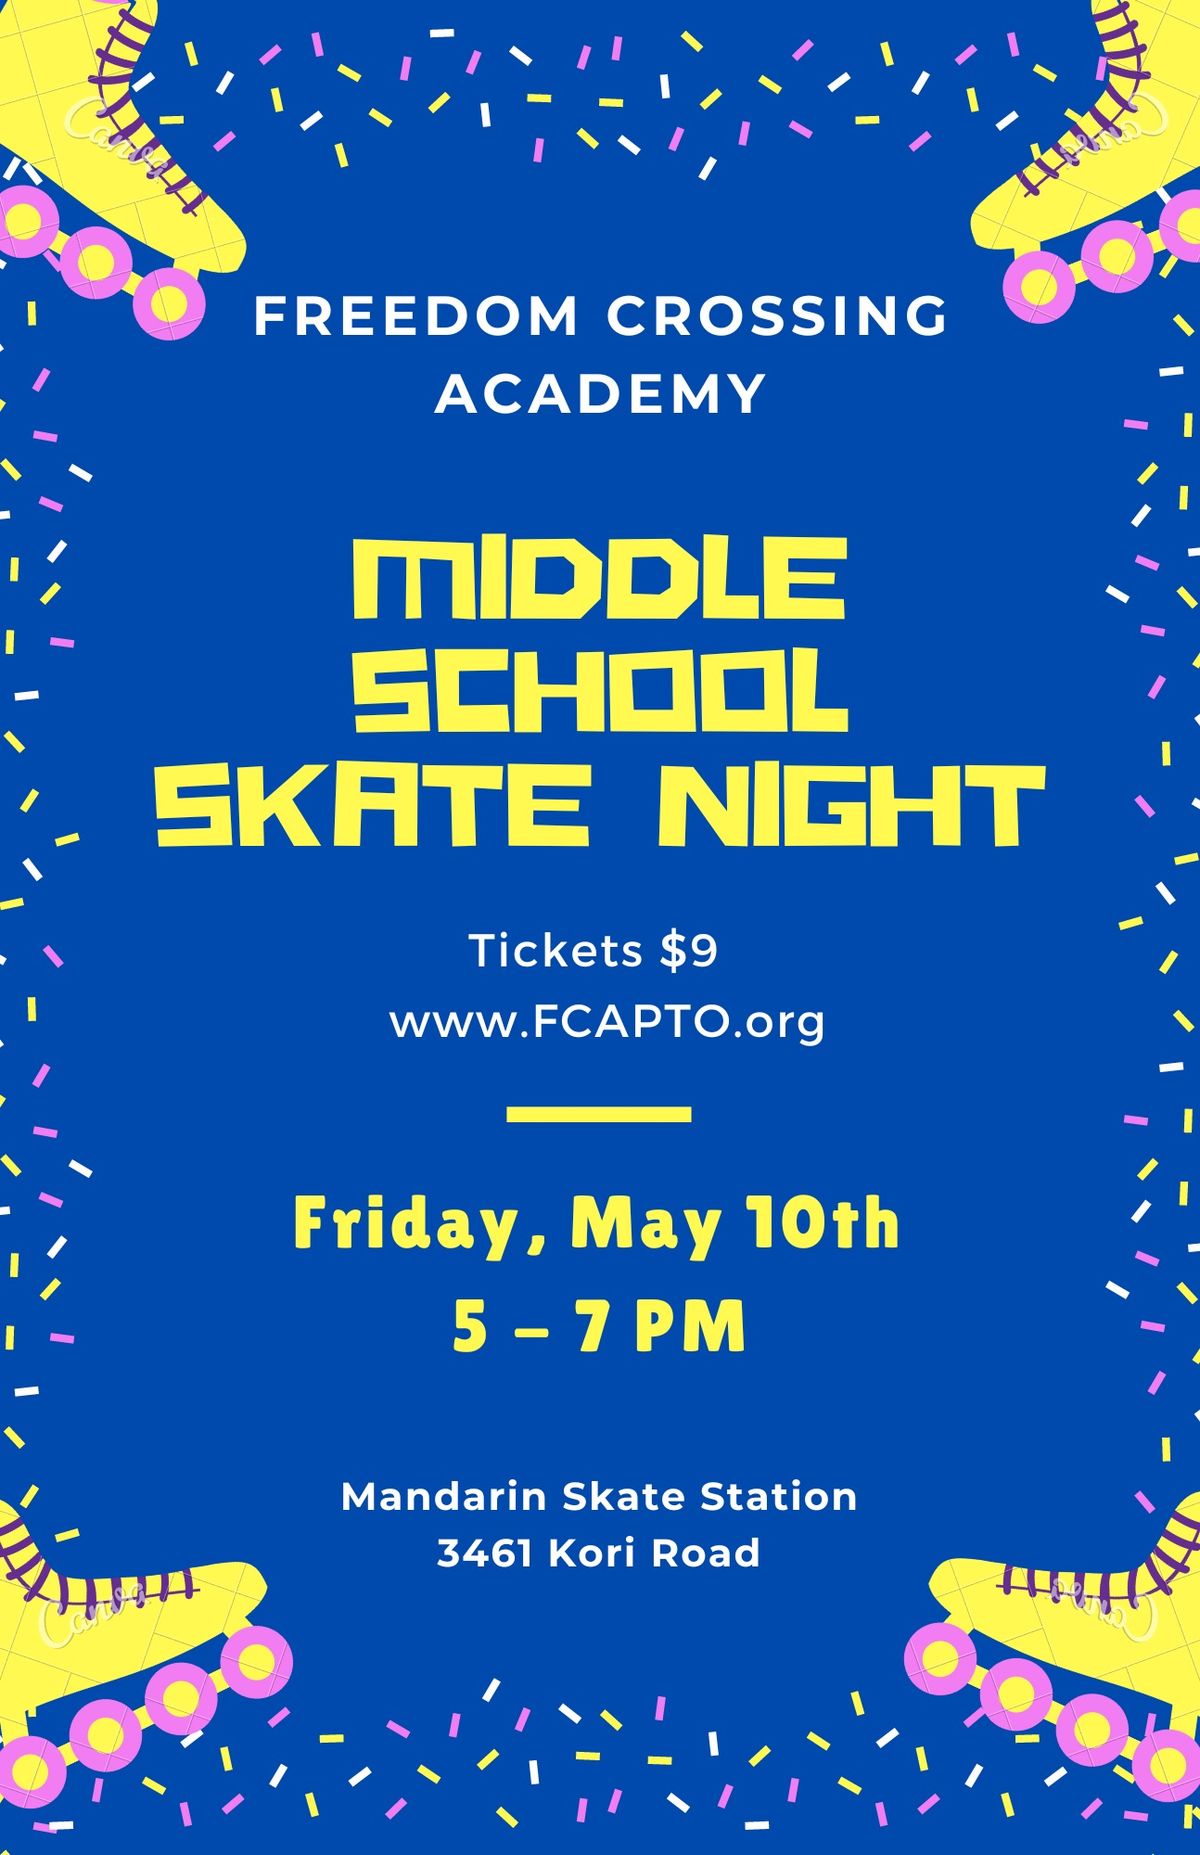 FCA Middle School Skate Night